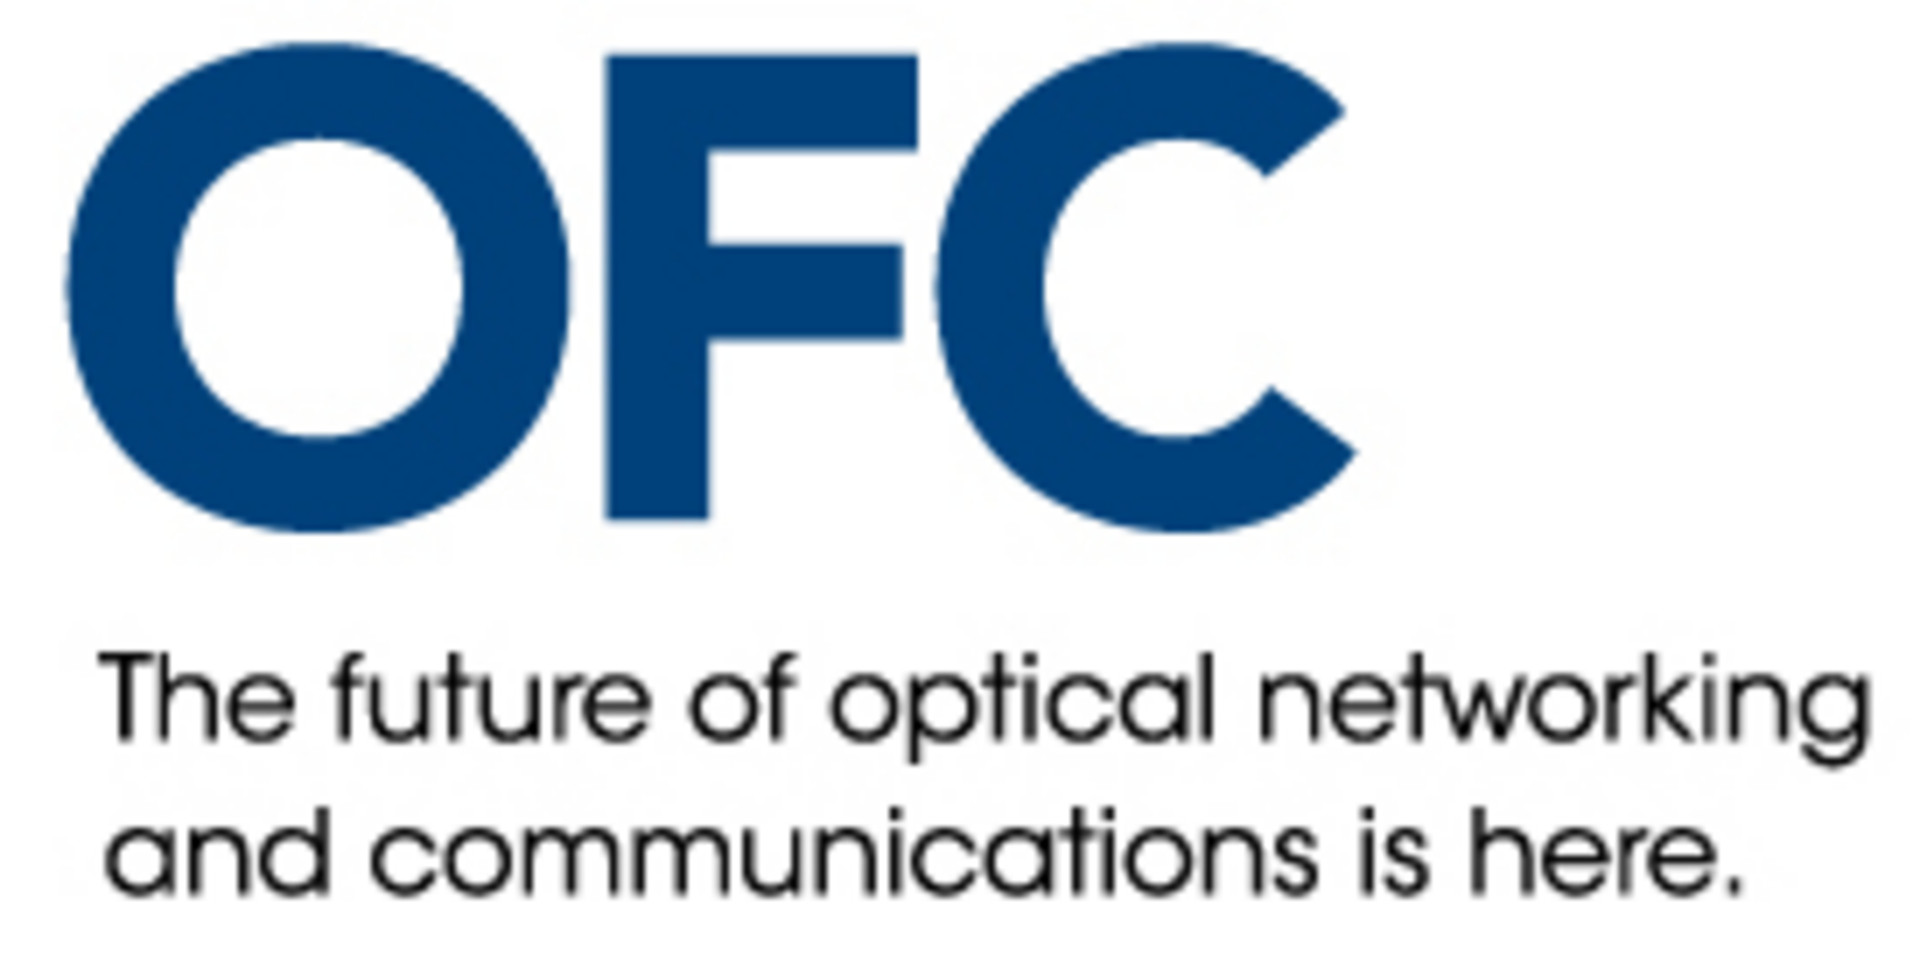 OFC - optical fiber communication logo